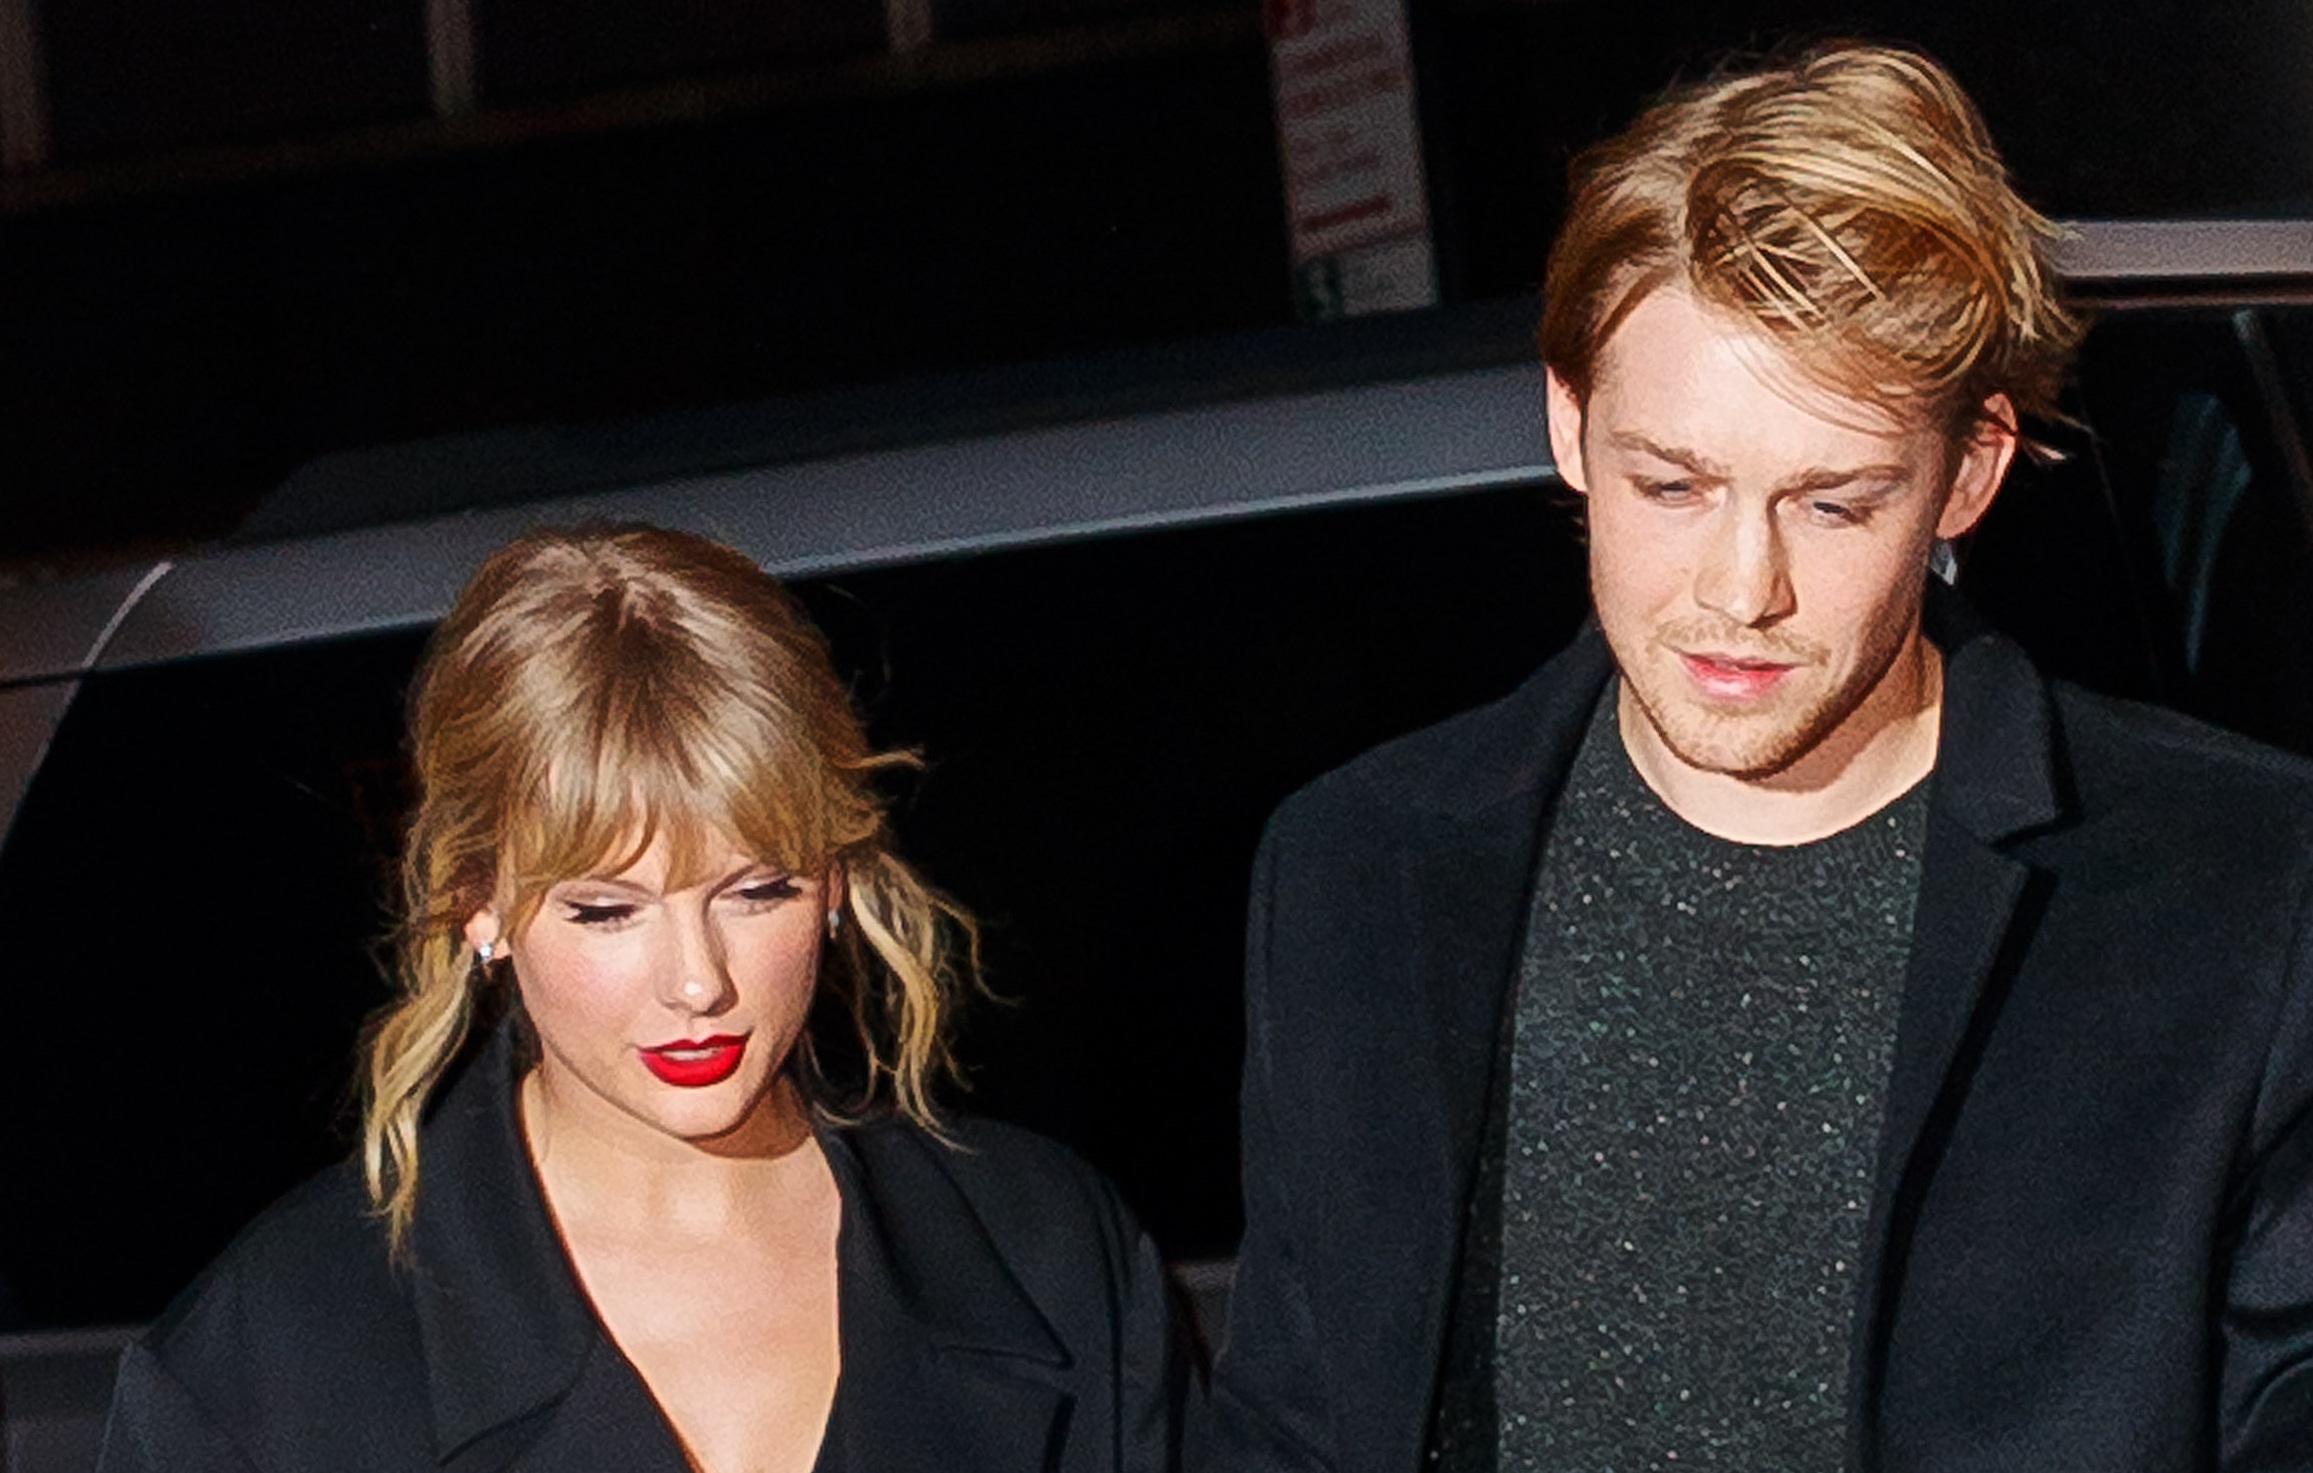 Taylor Swift and Joe Alwyn walk together in 2019